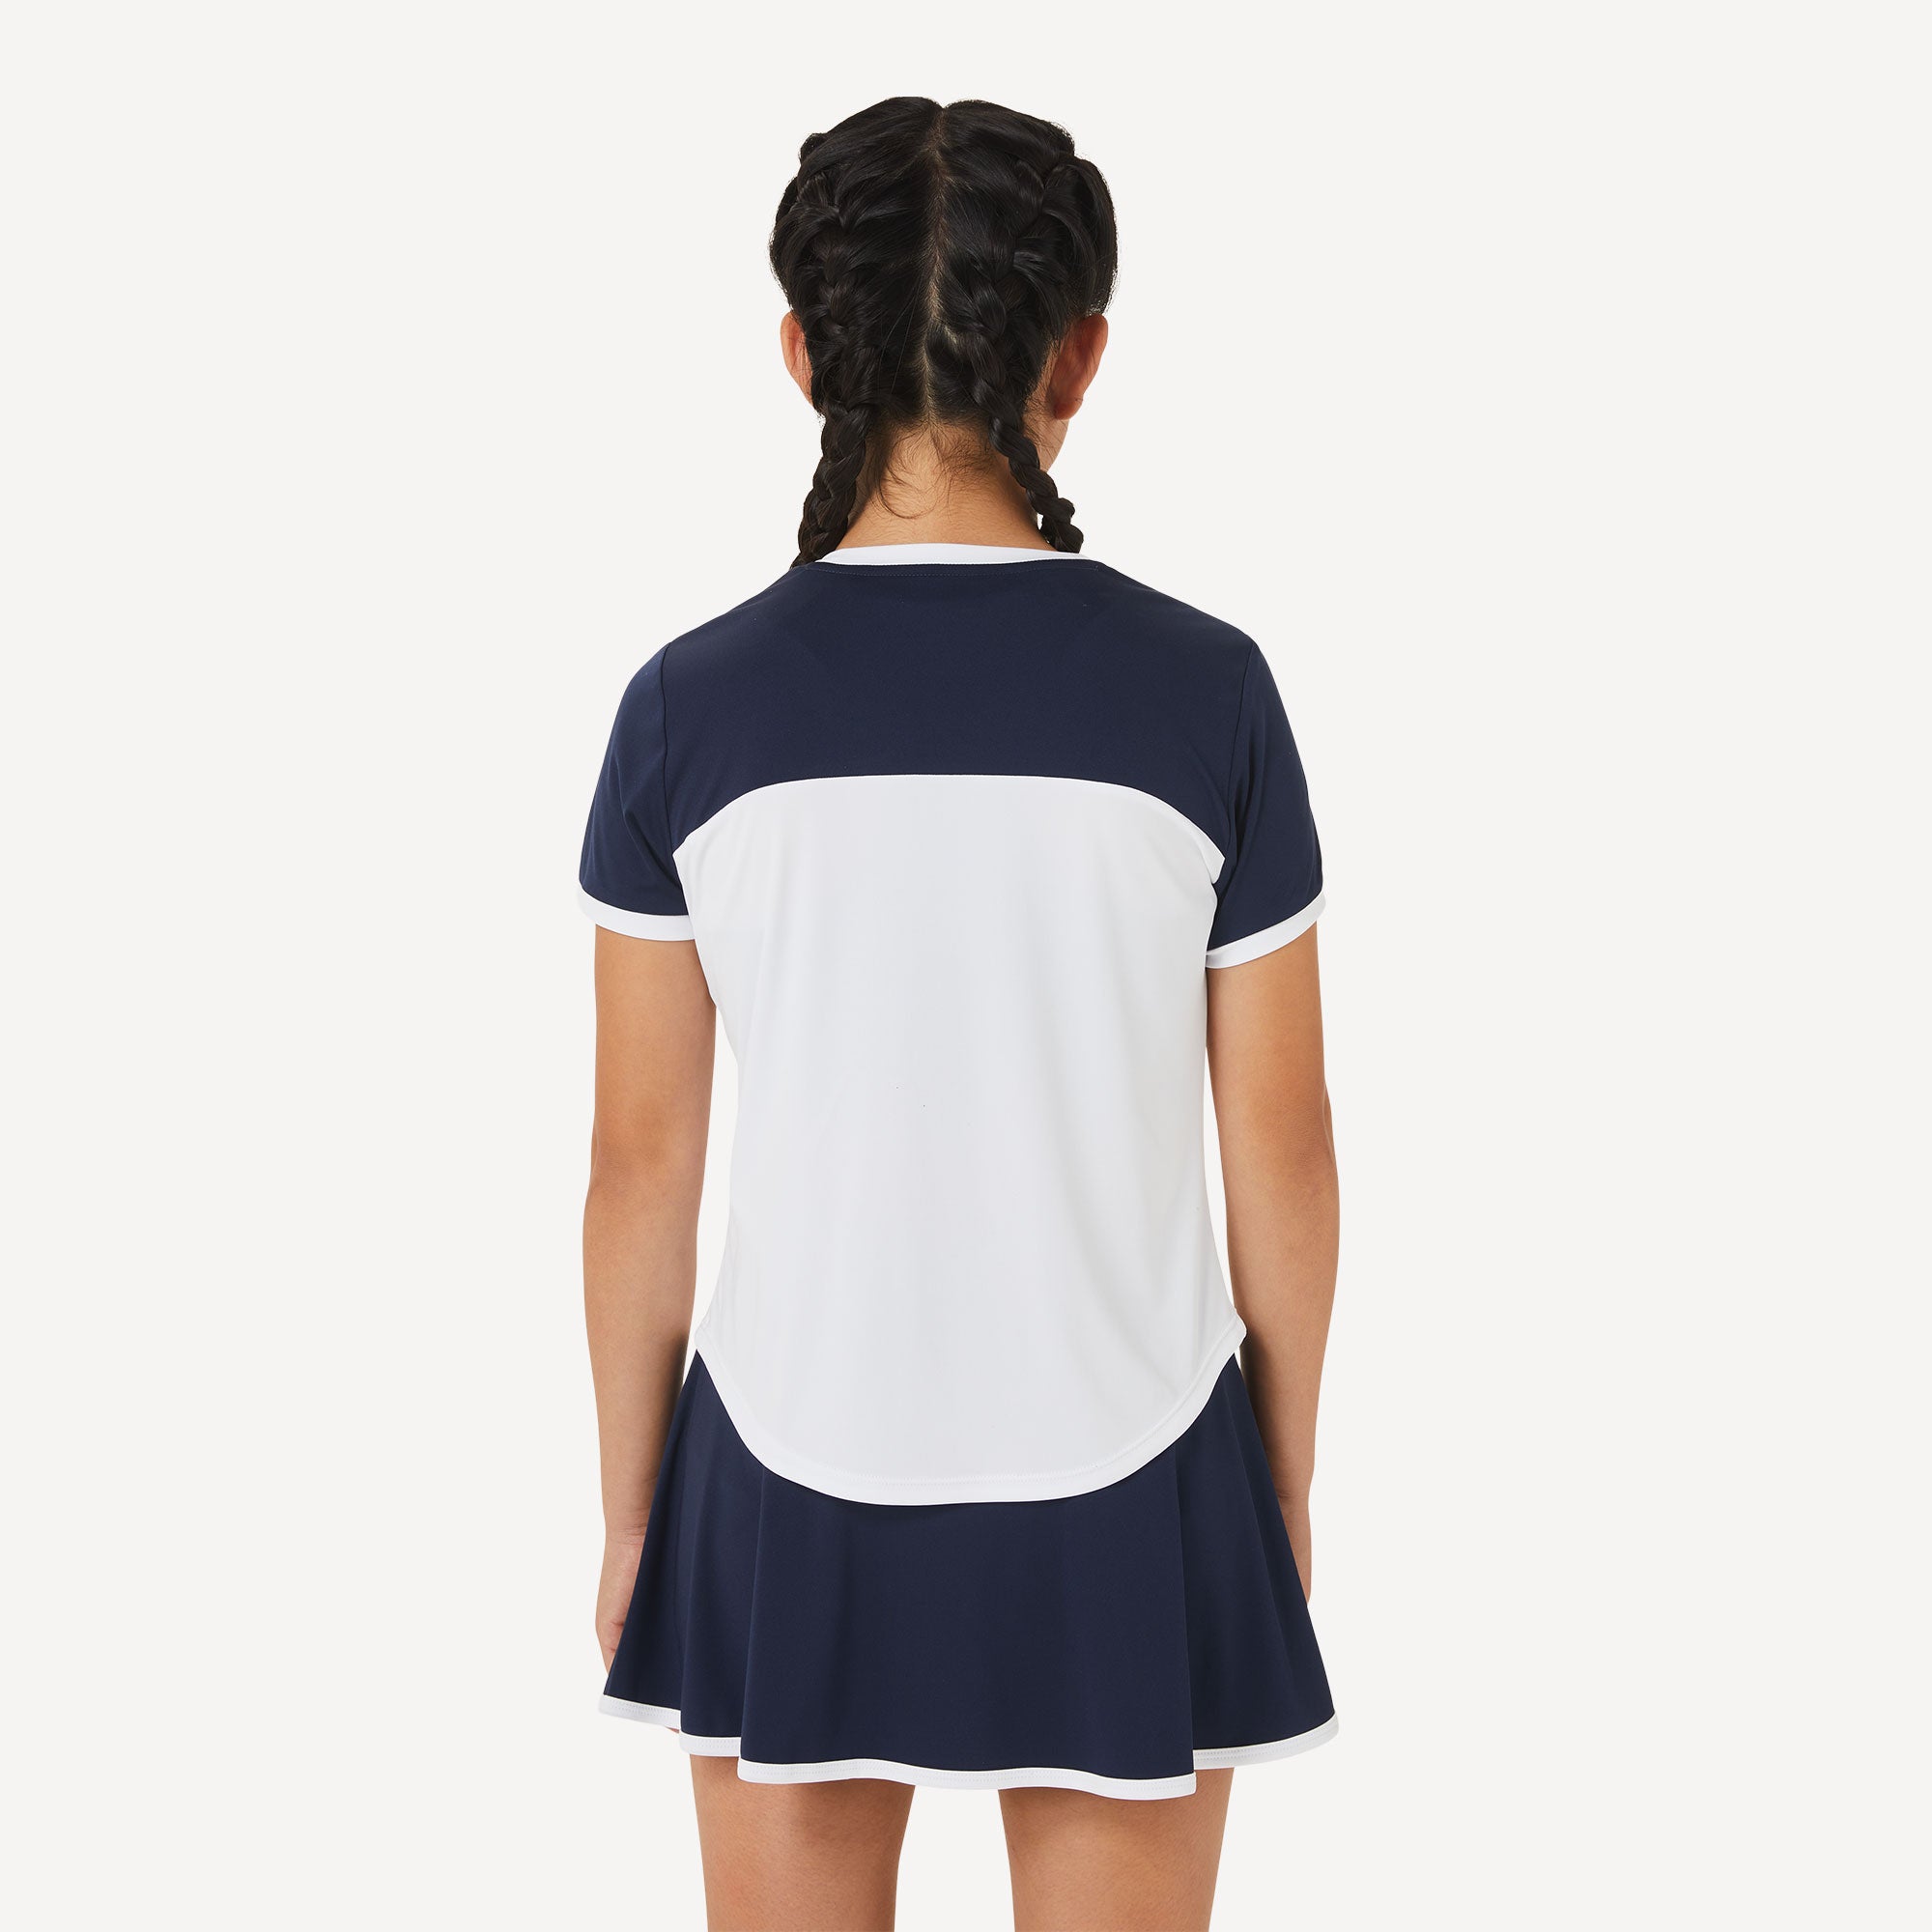 ASICS Girls' Tennis Shirt White (2)